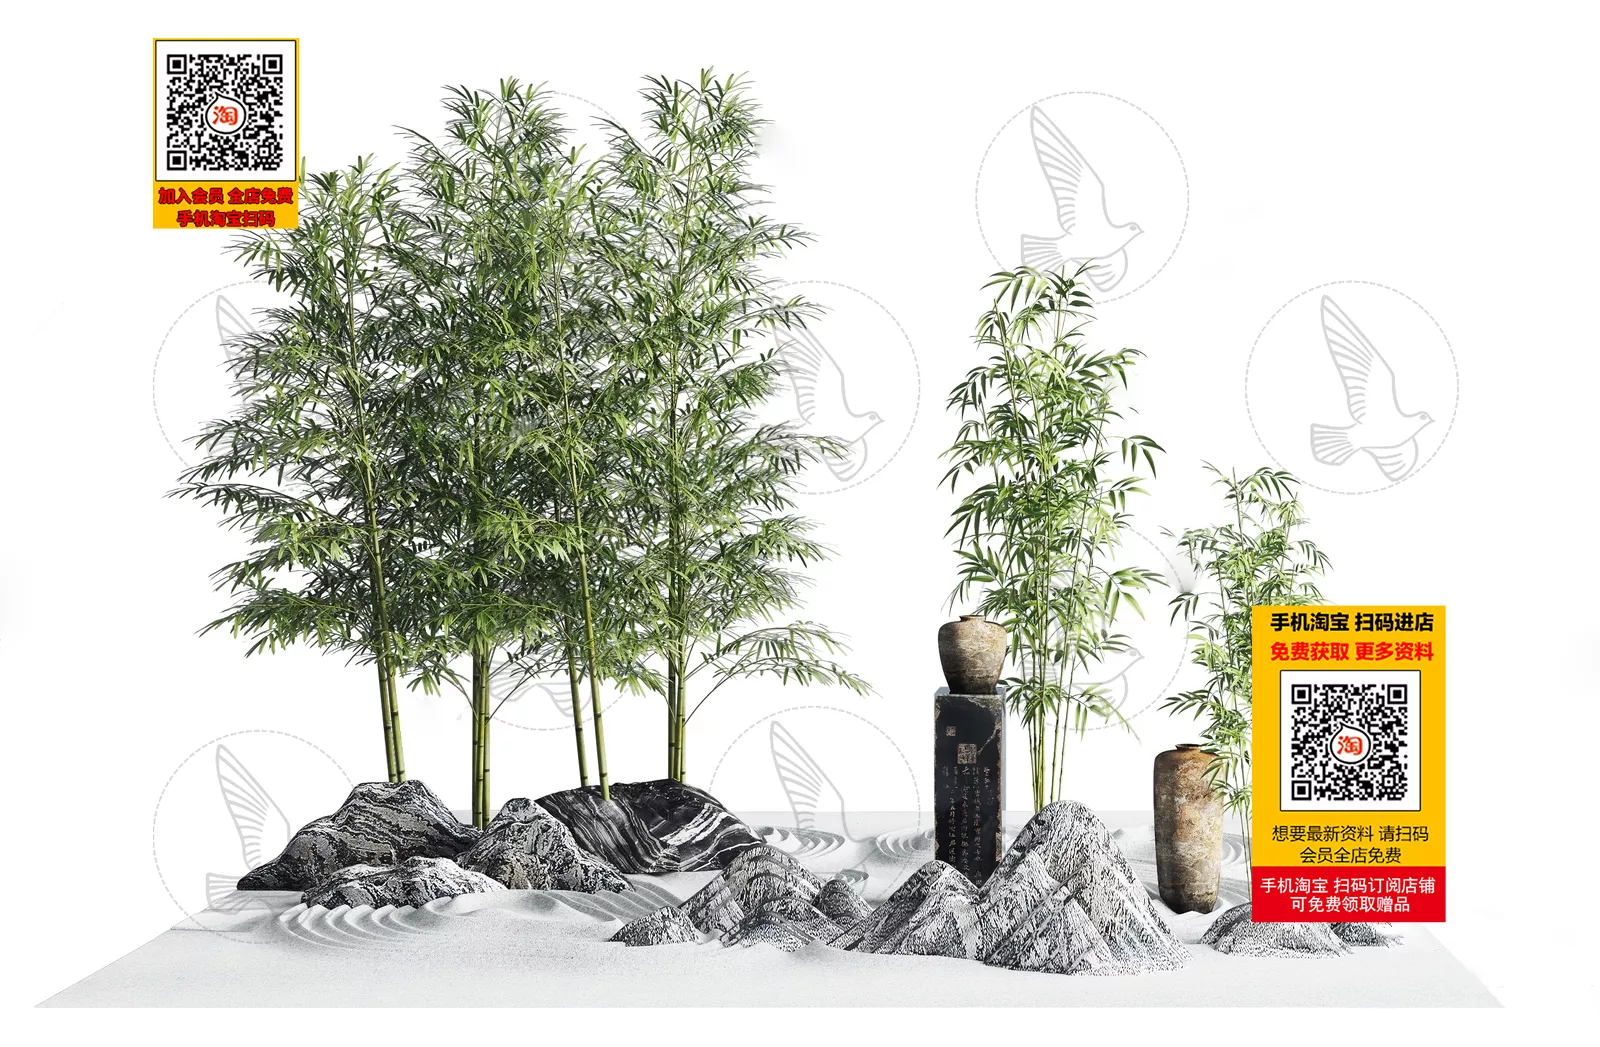 MODERN PLANTS - SKETCHUP 3D MODEL - VRAY OR ENSCAPE - ID12099